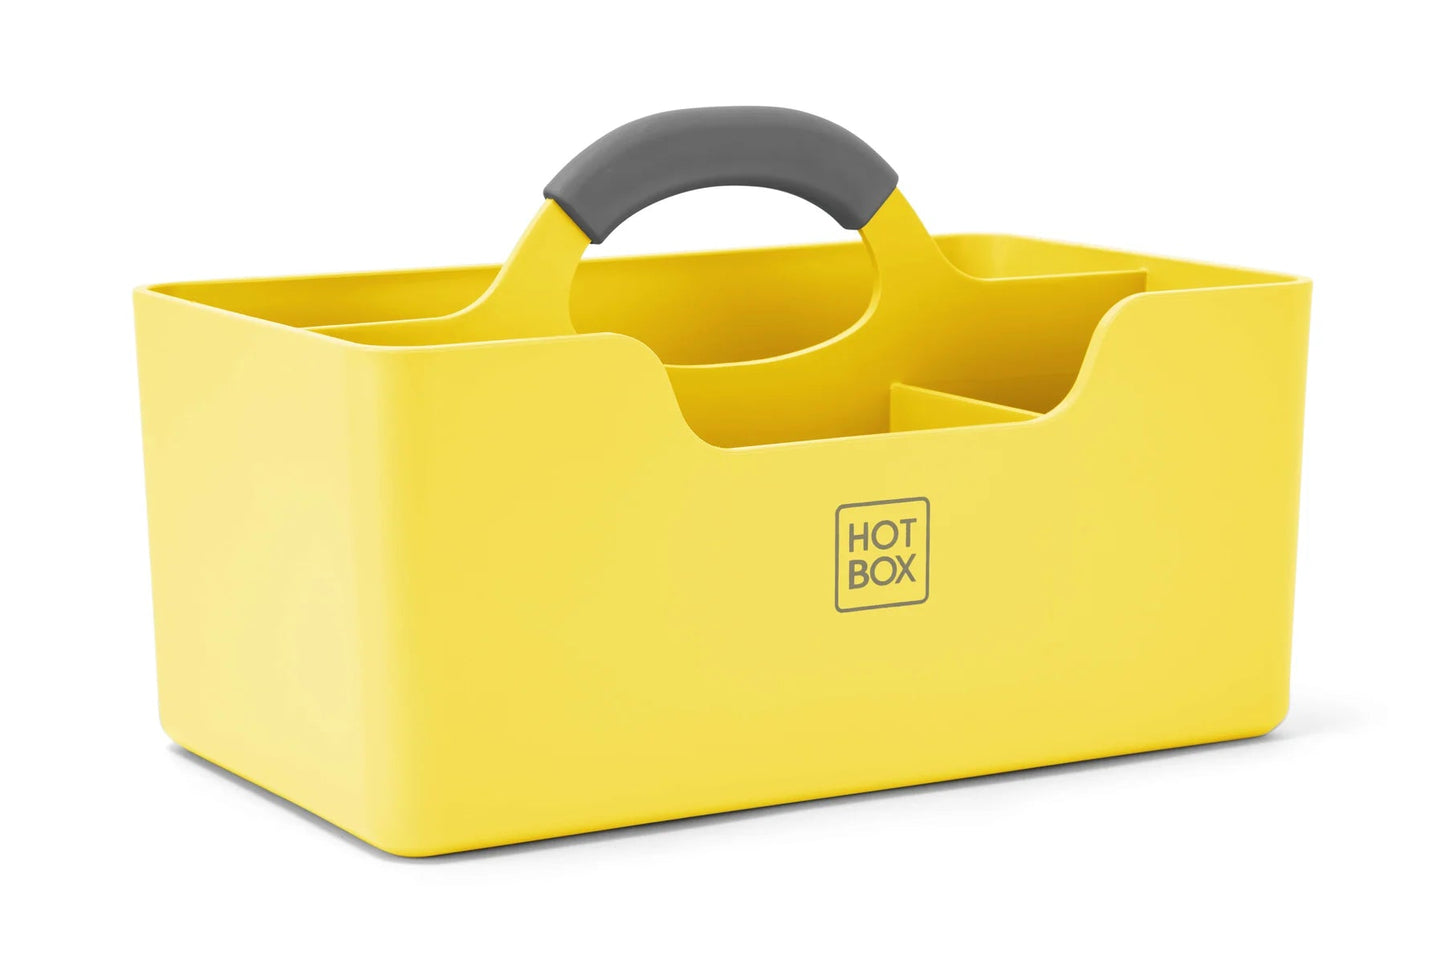 Hotbox 1 Yellow - Kasedia.store